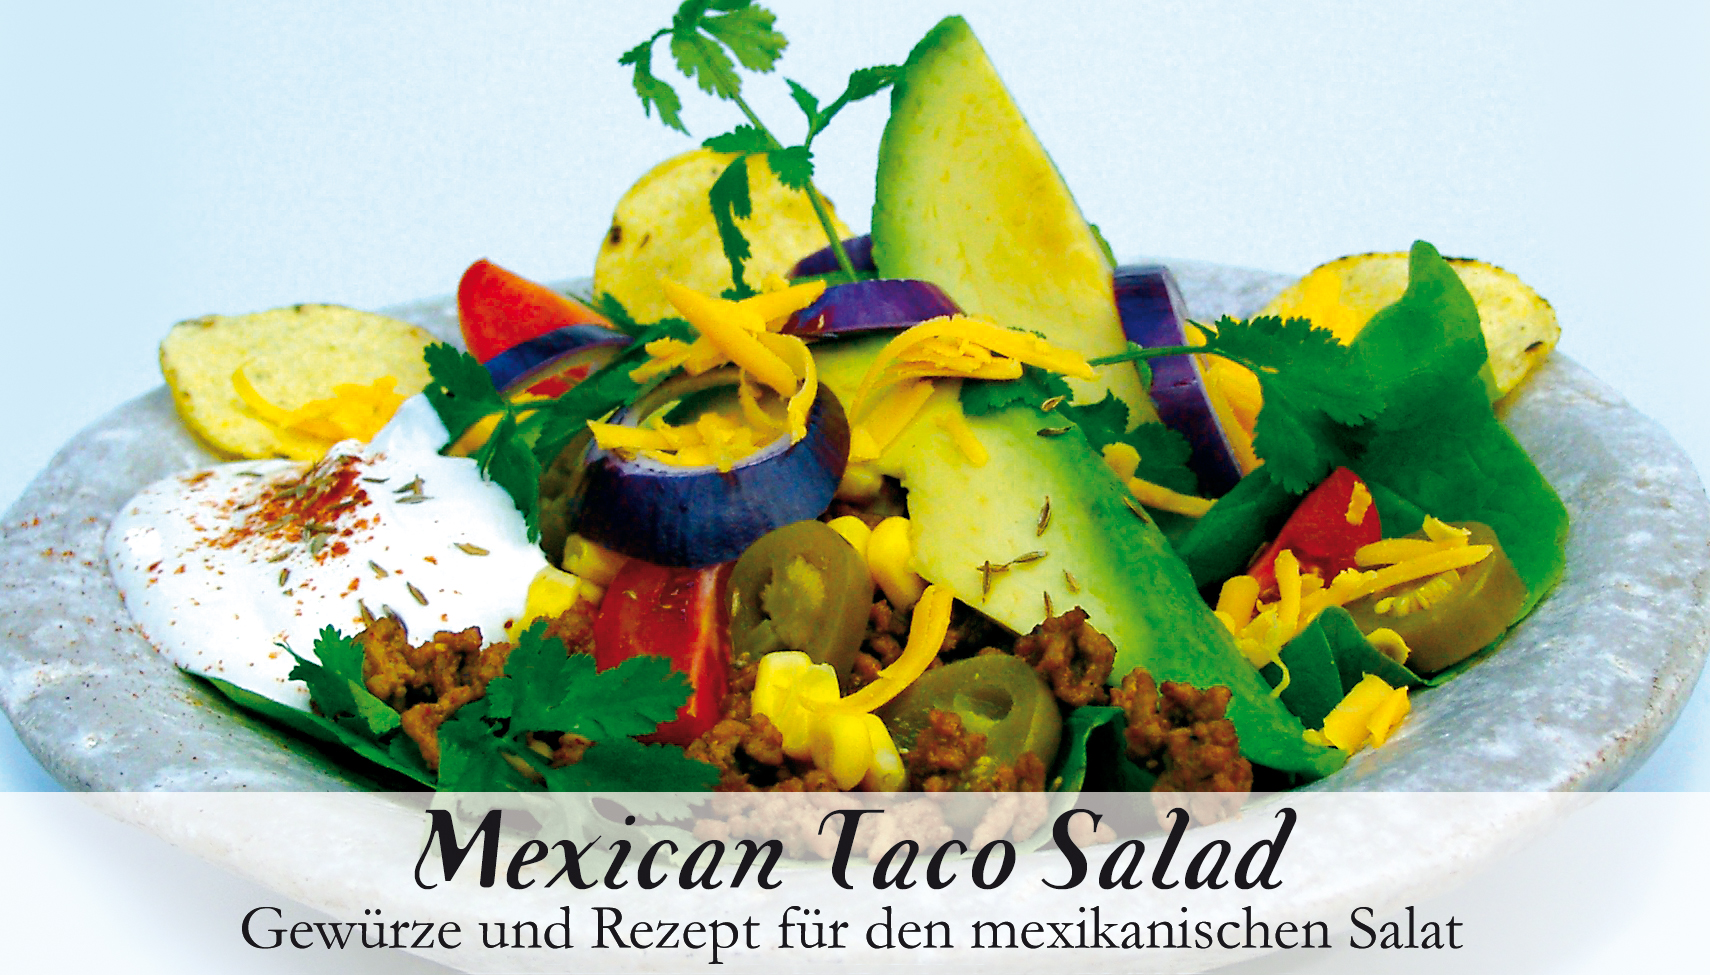 Mexican Taco Salad-Gewürzkasten